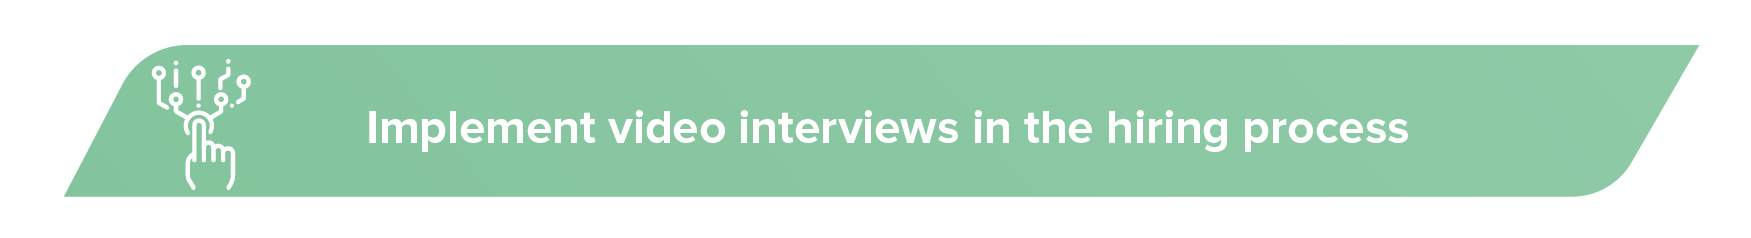 implement video interviews banner